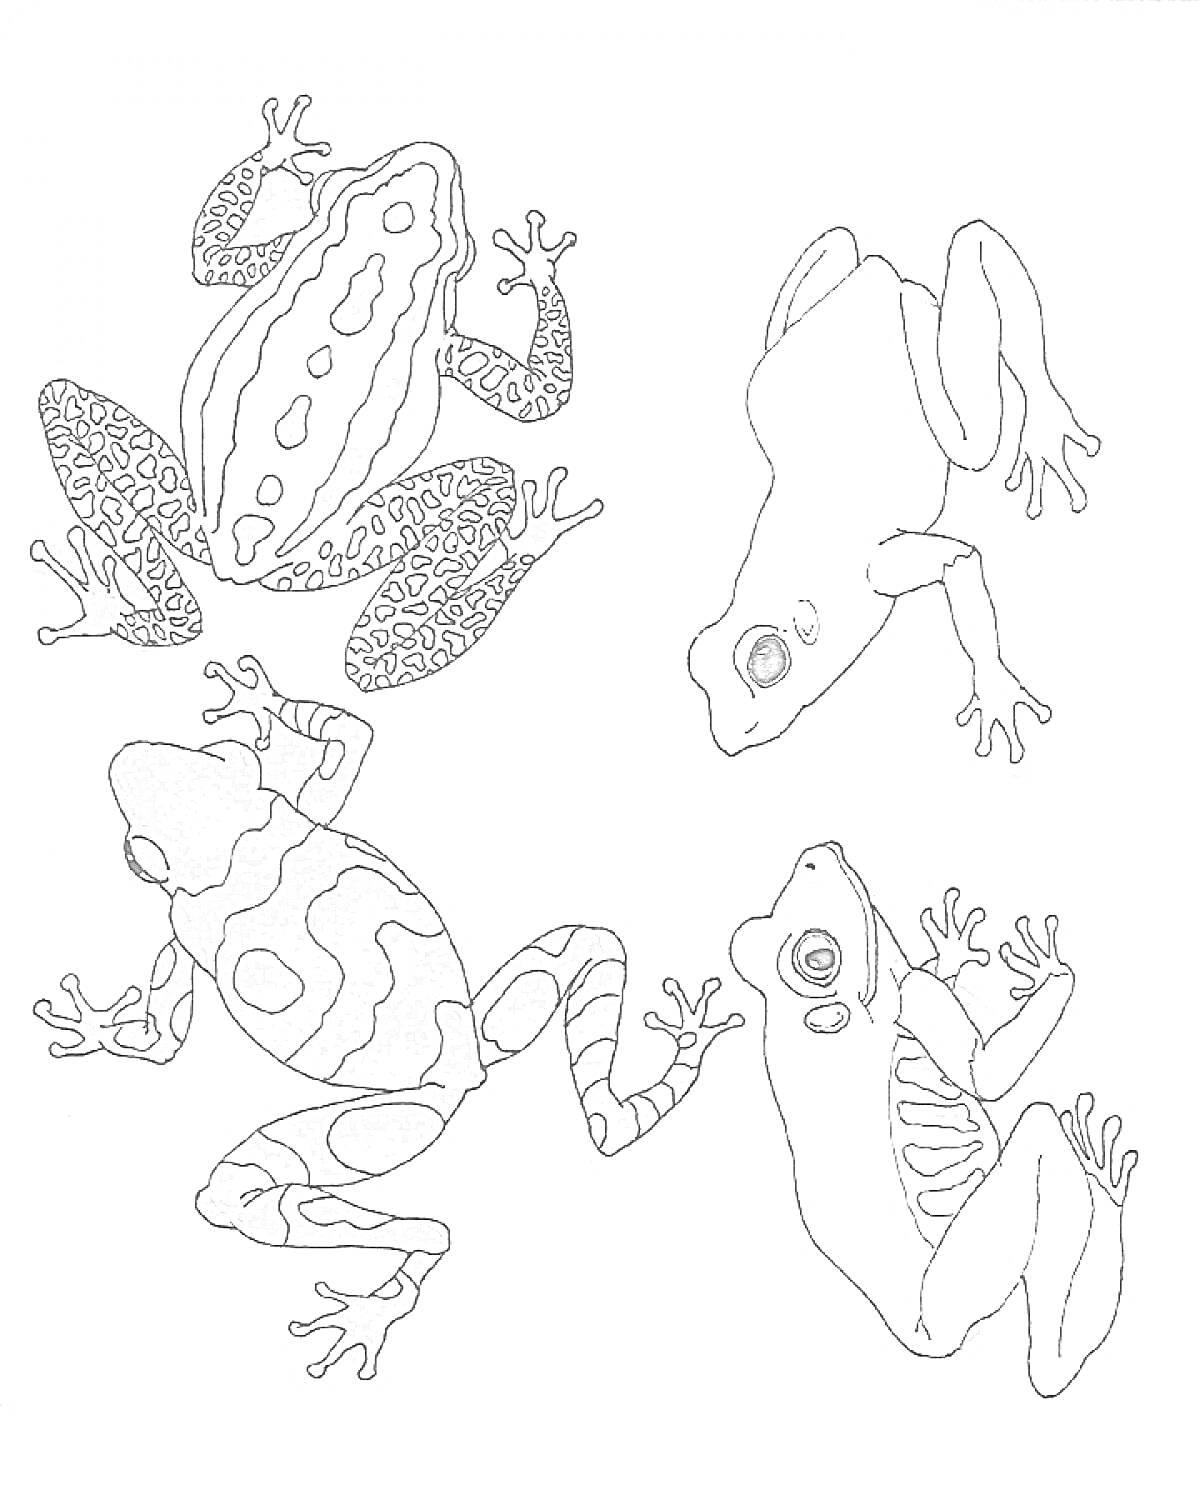 Раскраска Четыре лягушки с разным узором на теле